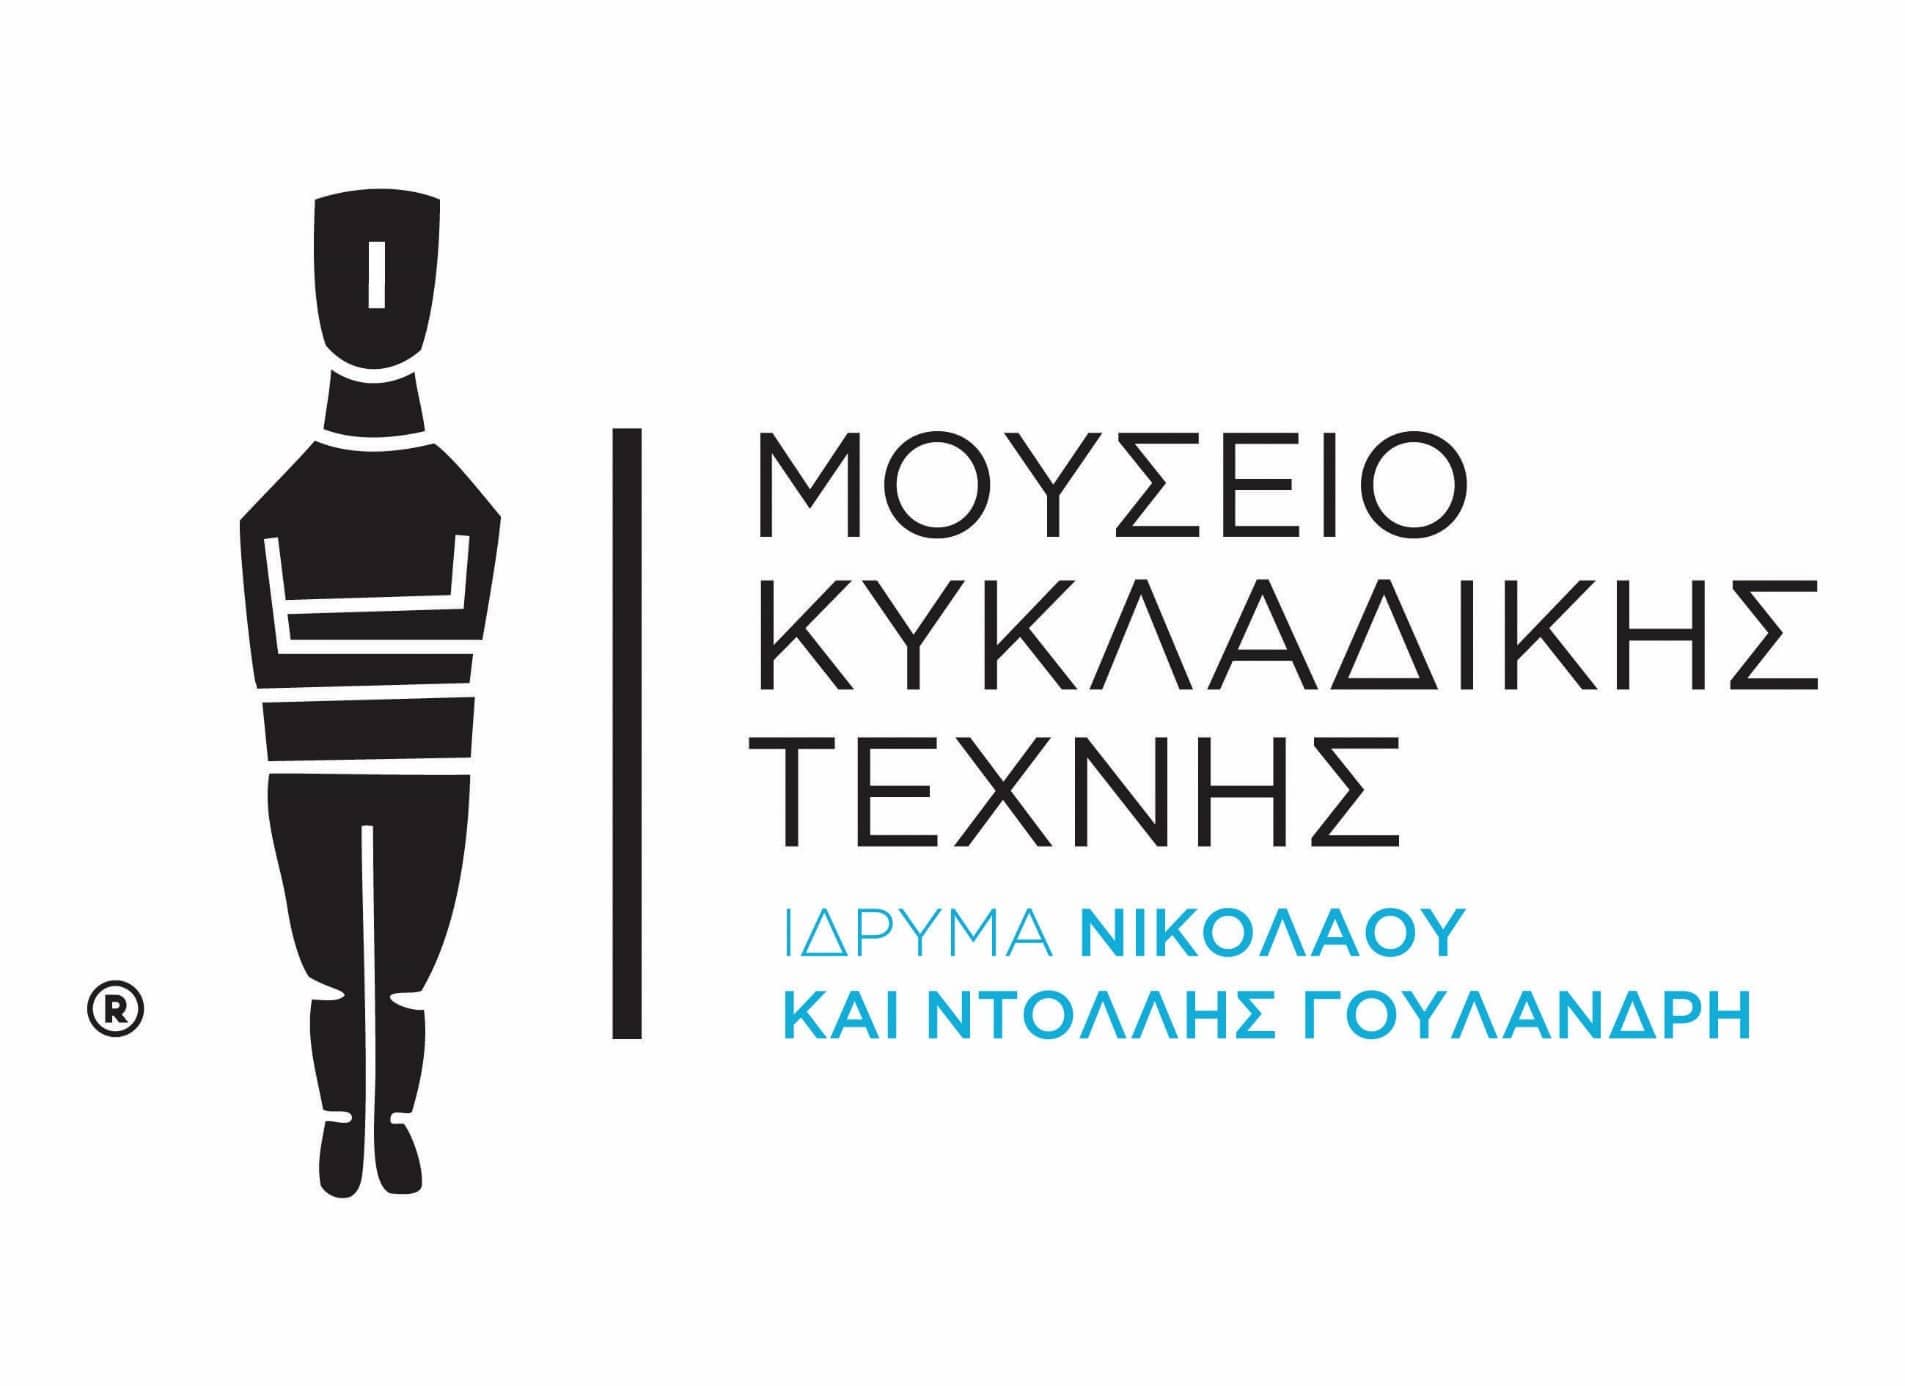 The Nicholas P. Goulandris Foundation - Museum of Cycladic Art
Μουσείο Κυκλαδικής Τέχνης